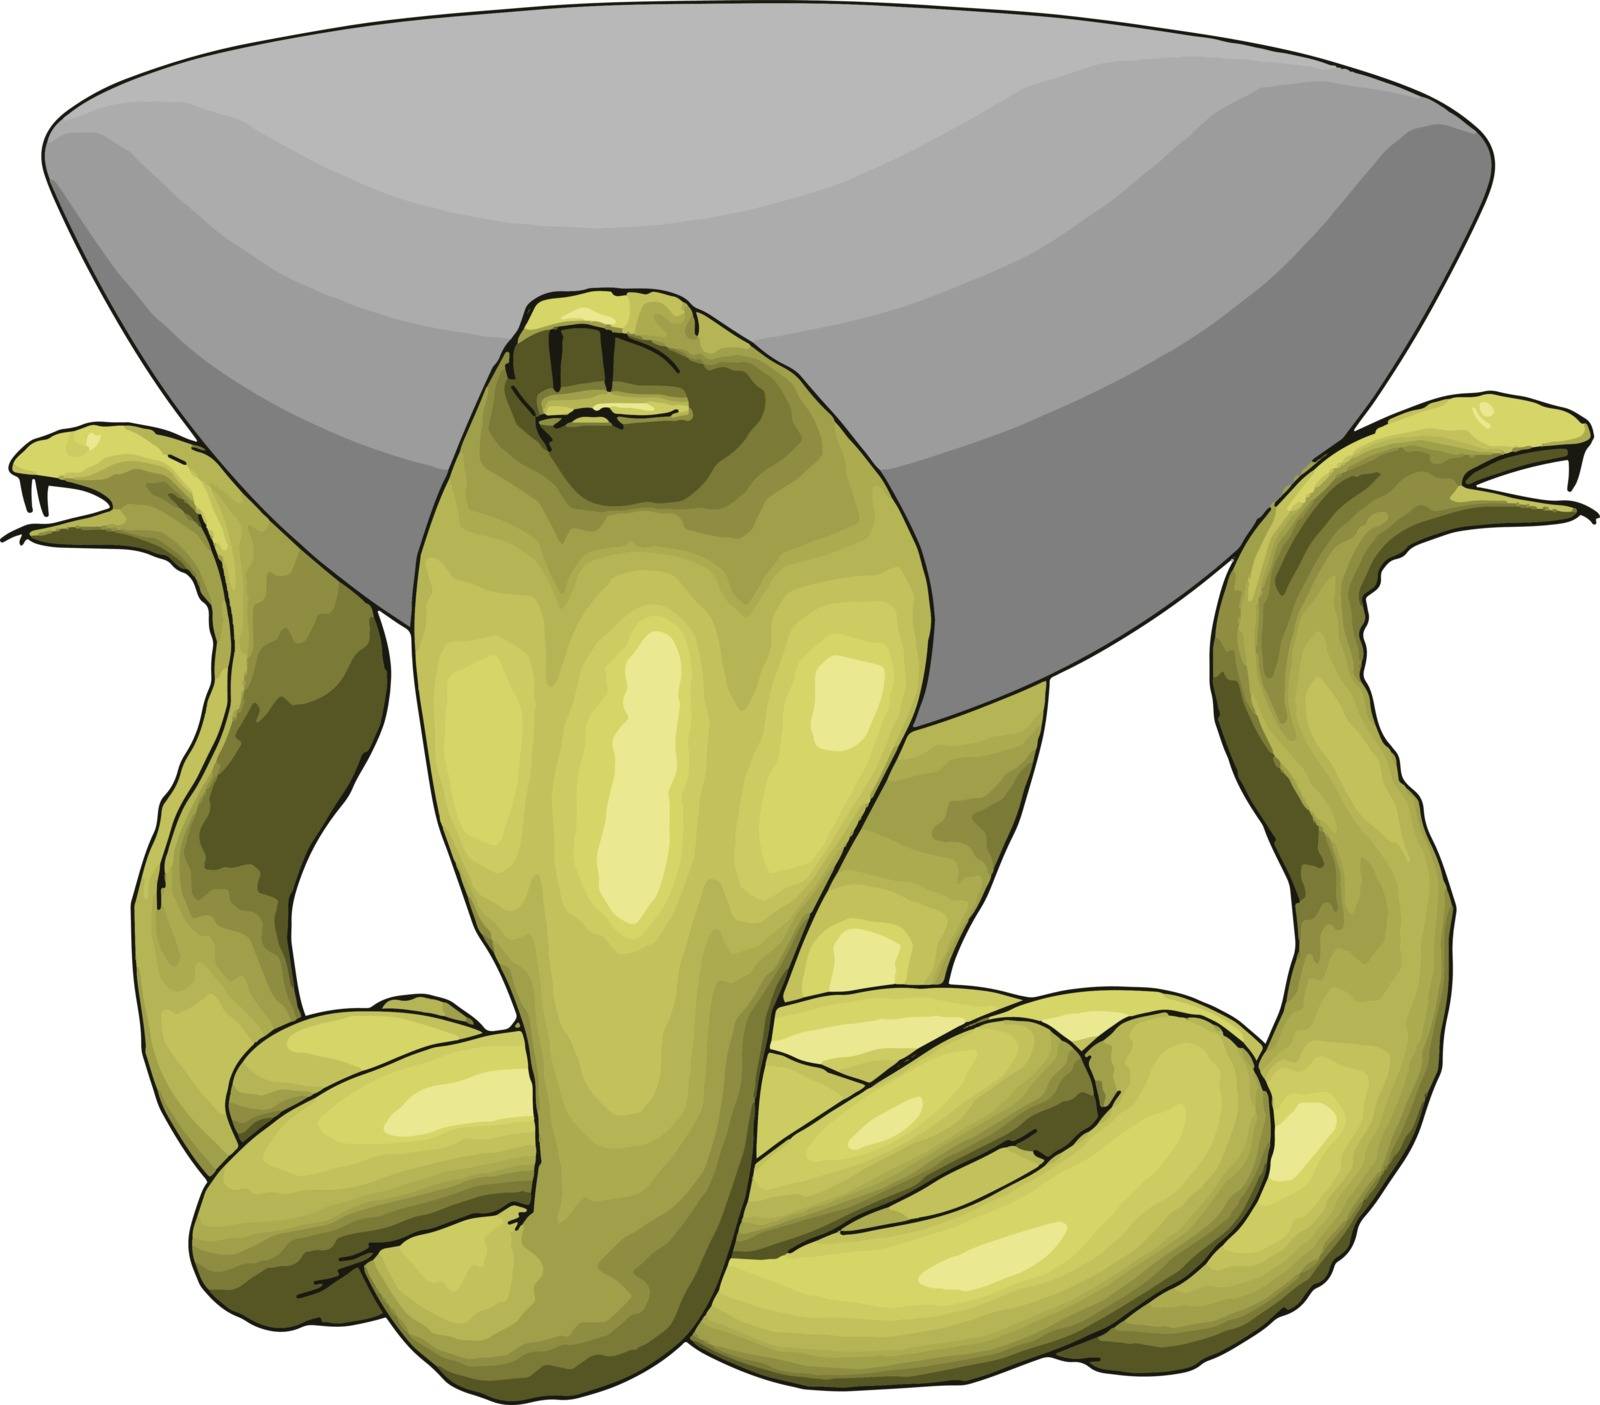 Yellow snakes holding bowl, illustration, vector on white background.